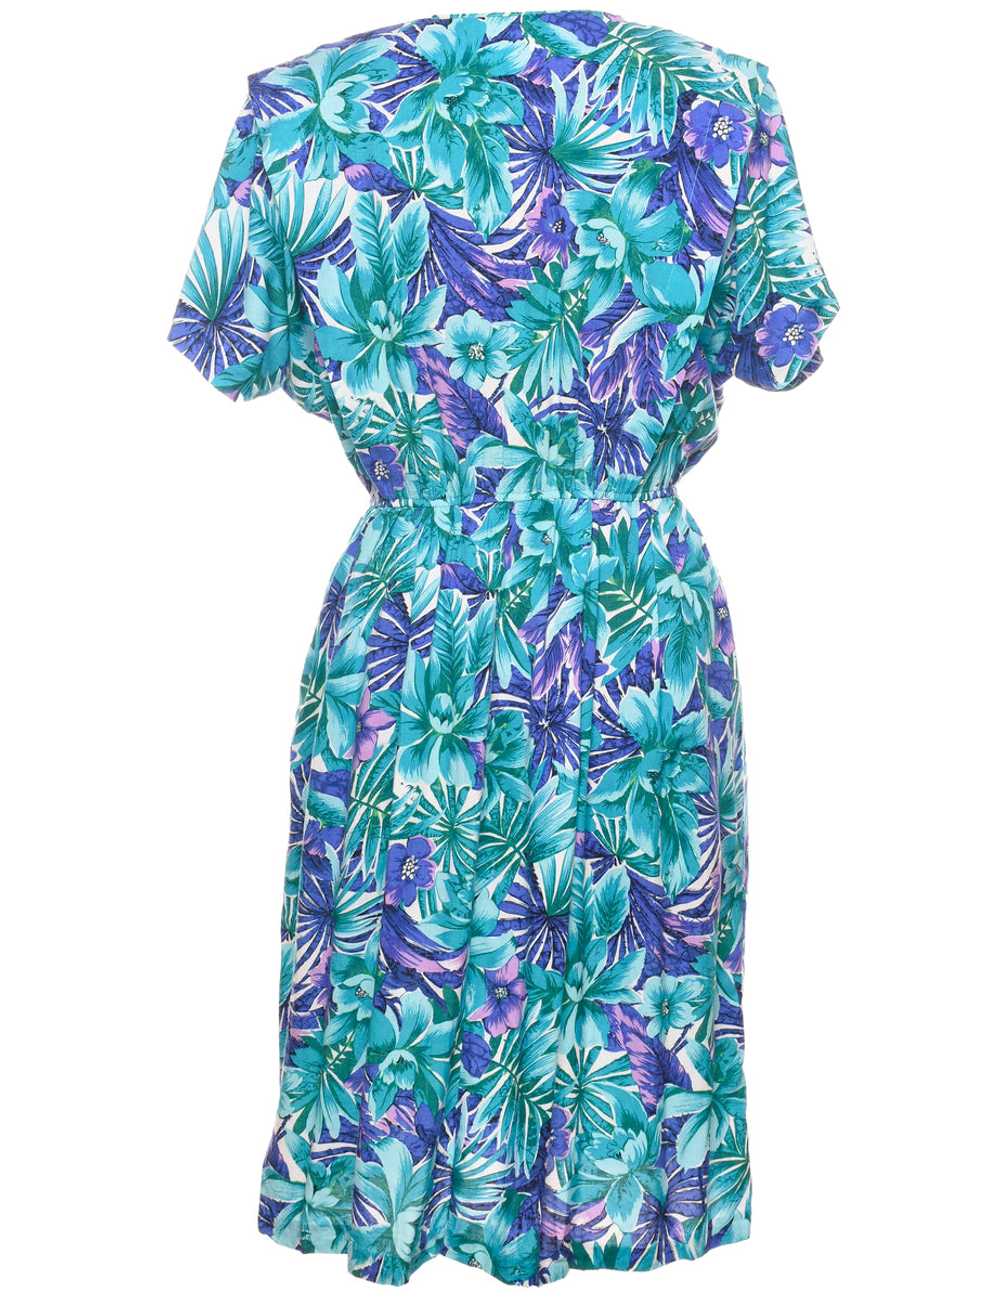 Leafy Print Dress - M - image 2